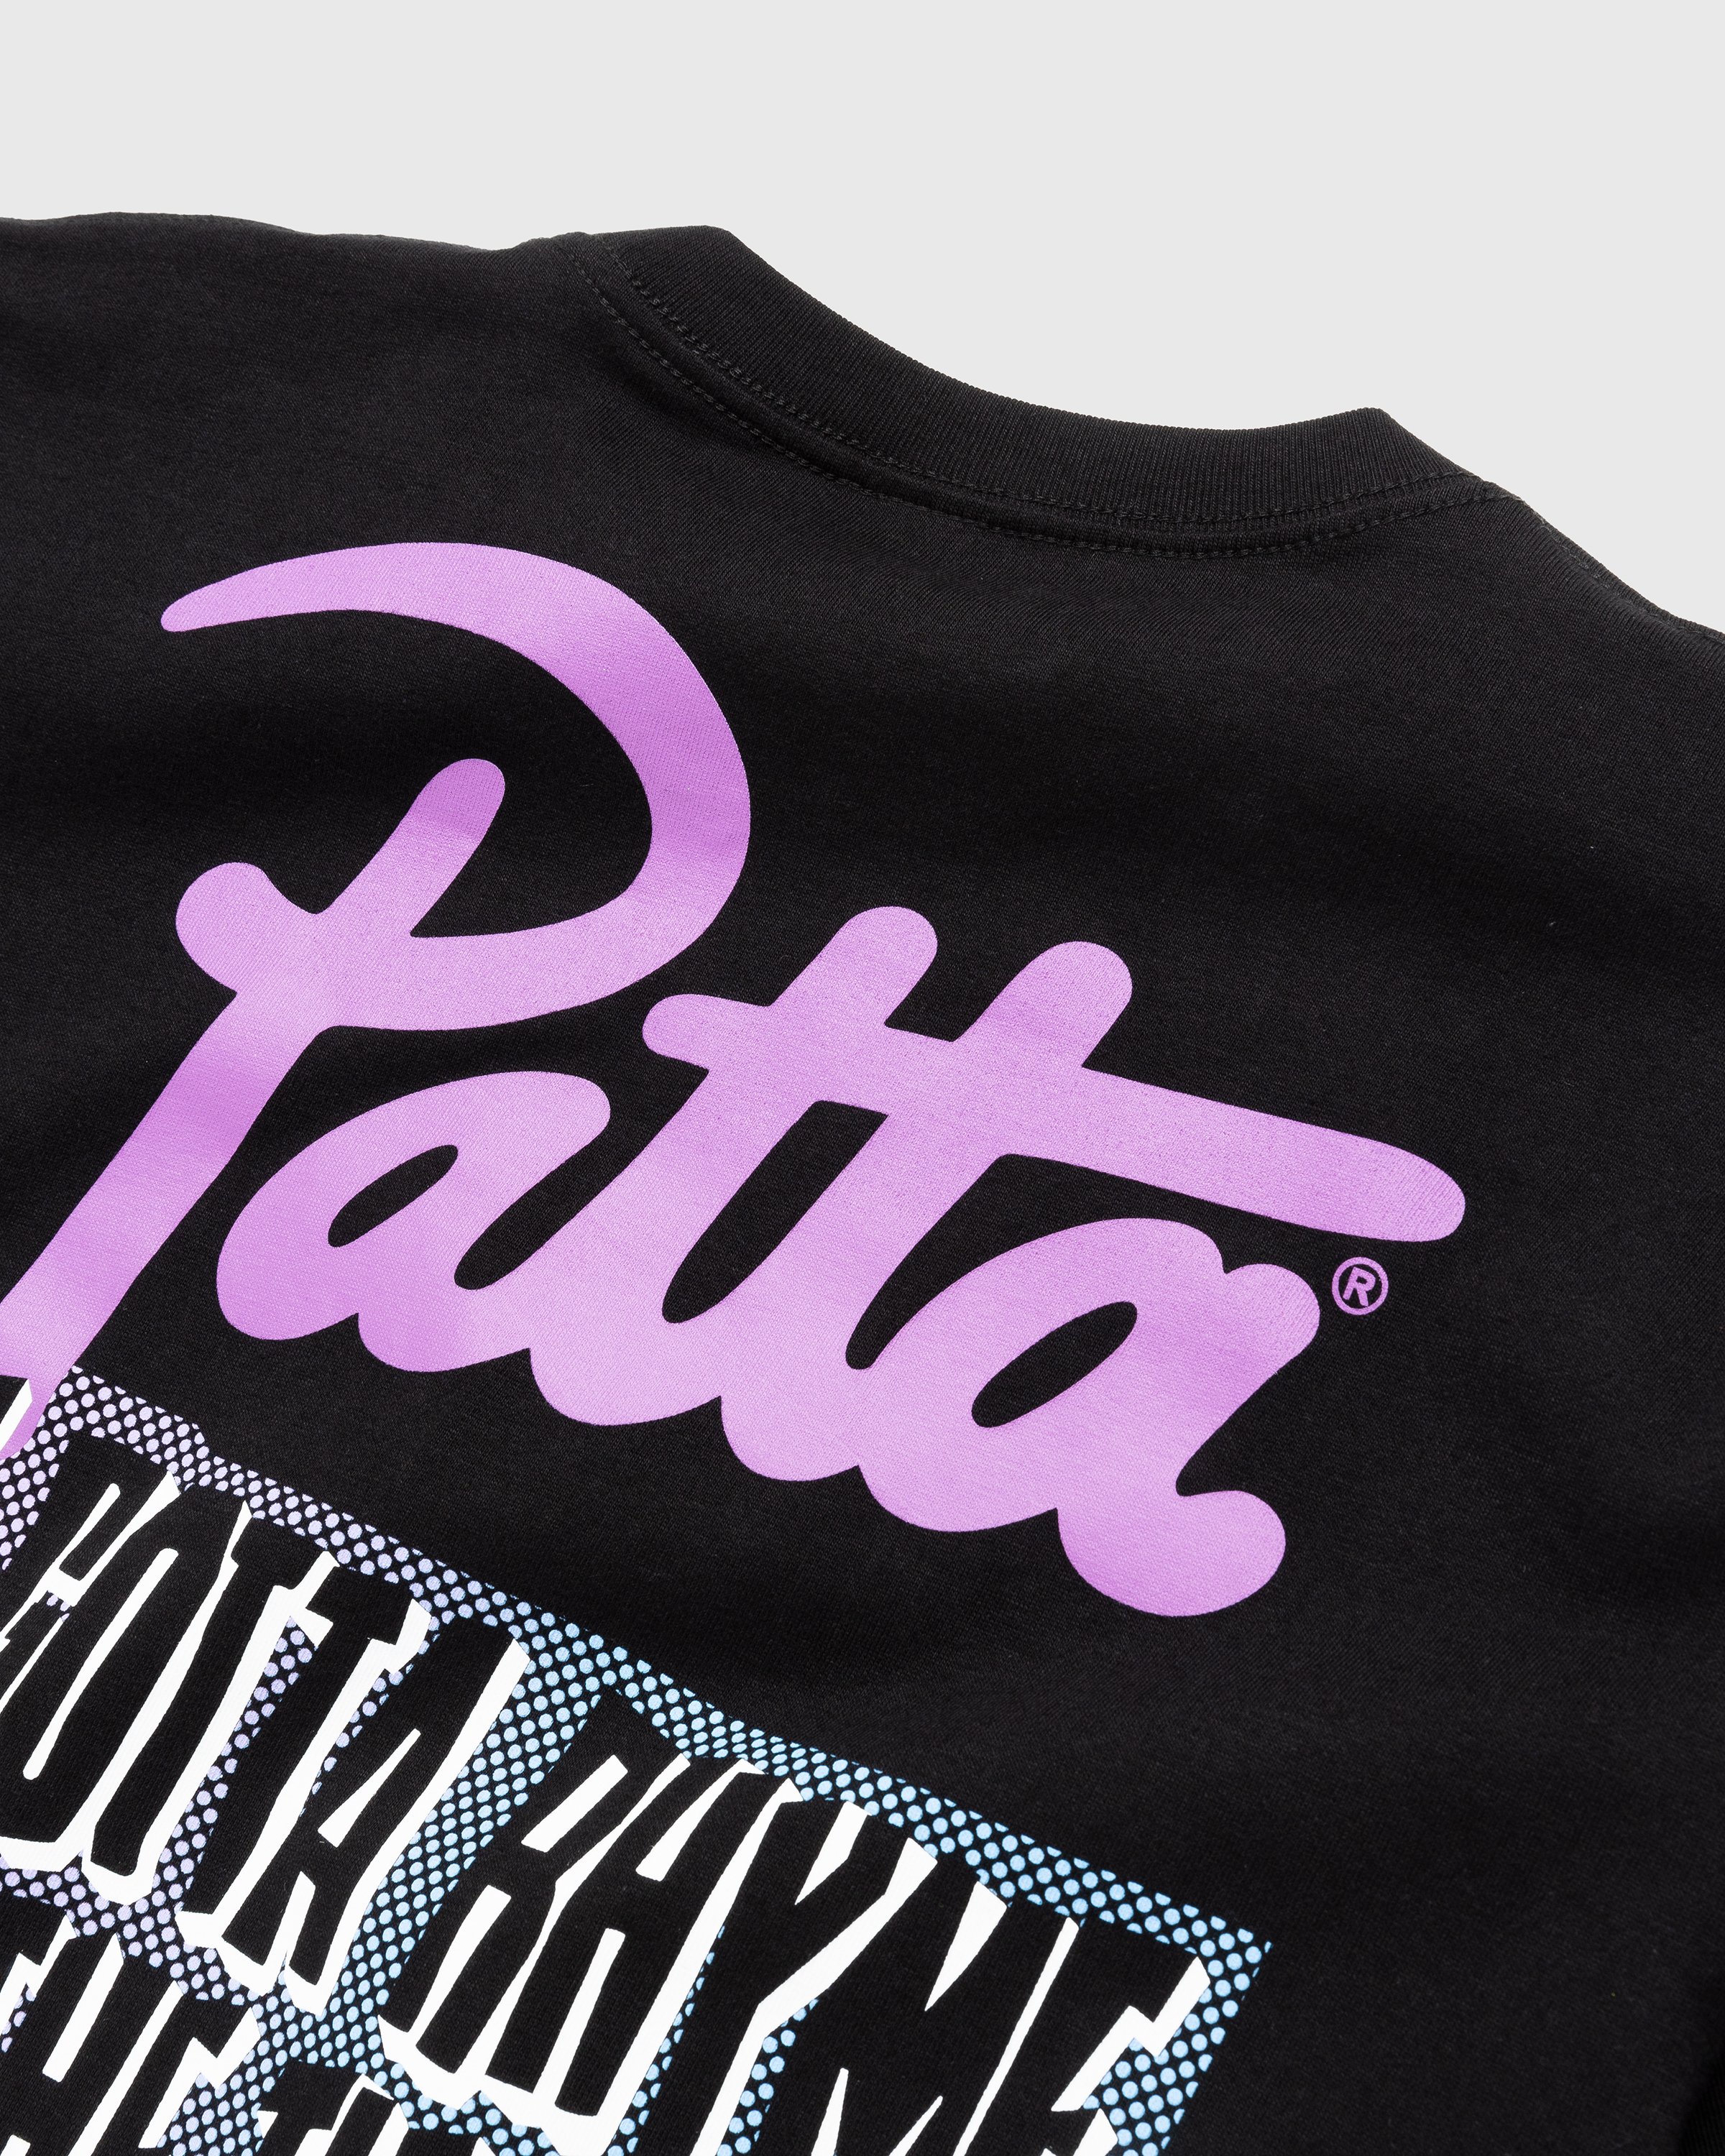 Patta - We Gotta Rhyme T-Shirt Black - Clothing - Black - Image 7